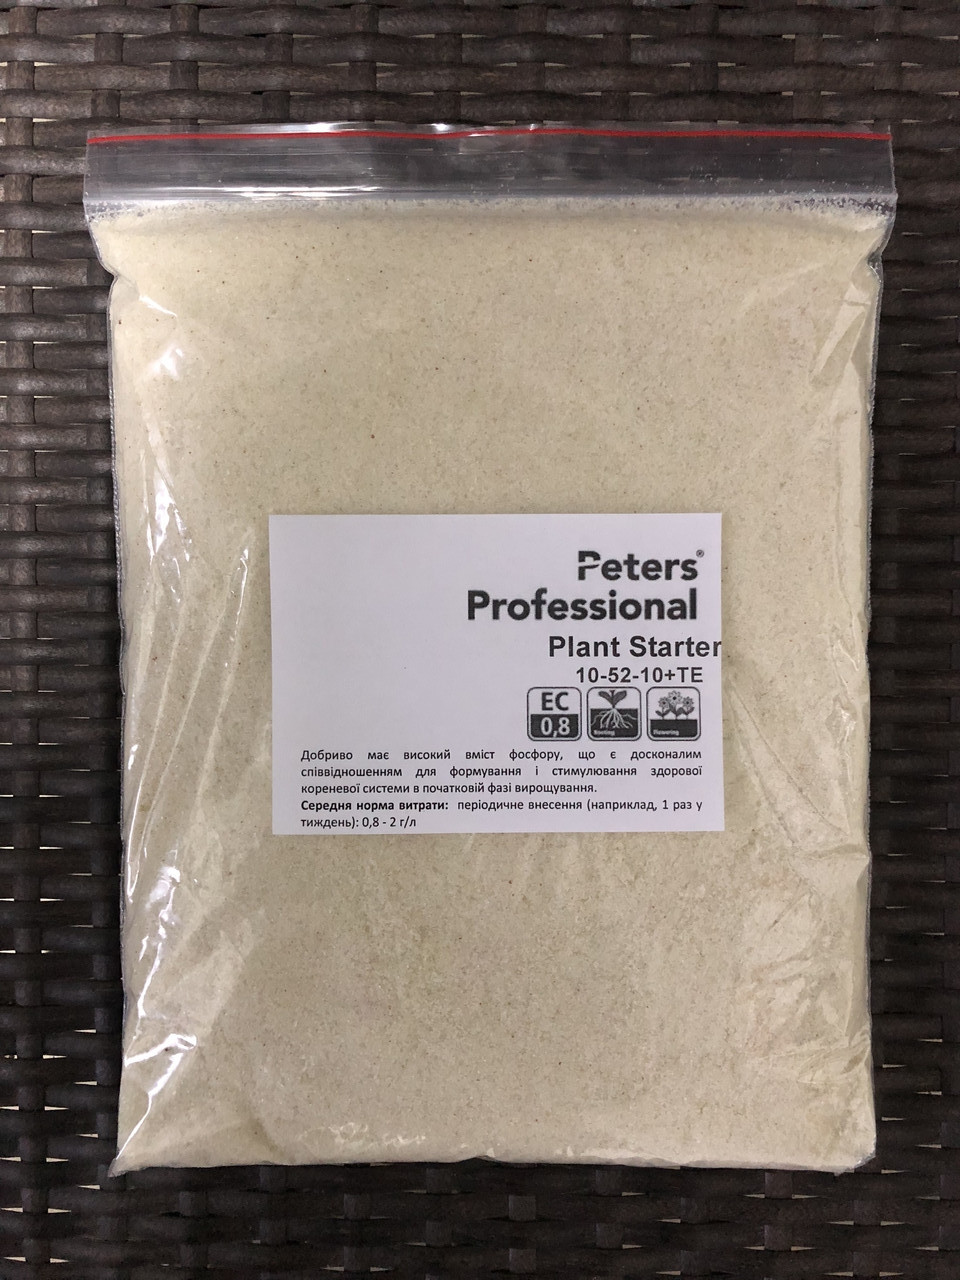 Peters Professional Plant Starter 10-52-10+TE (Укорінення) 1 кг, фото 1